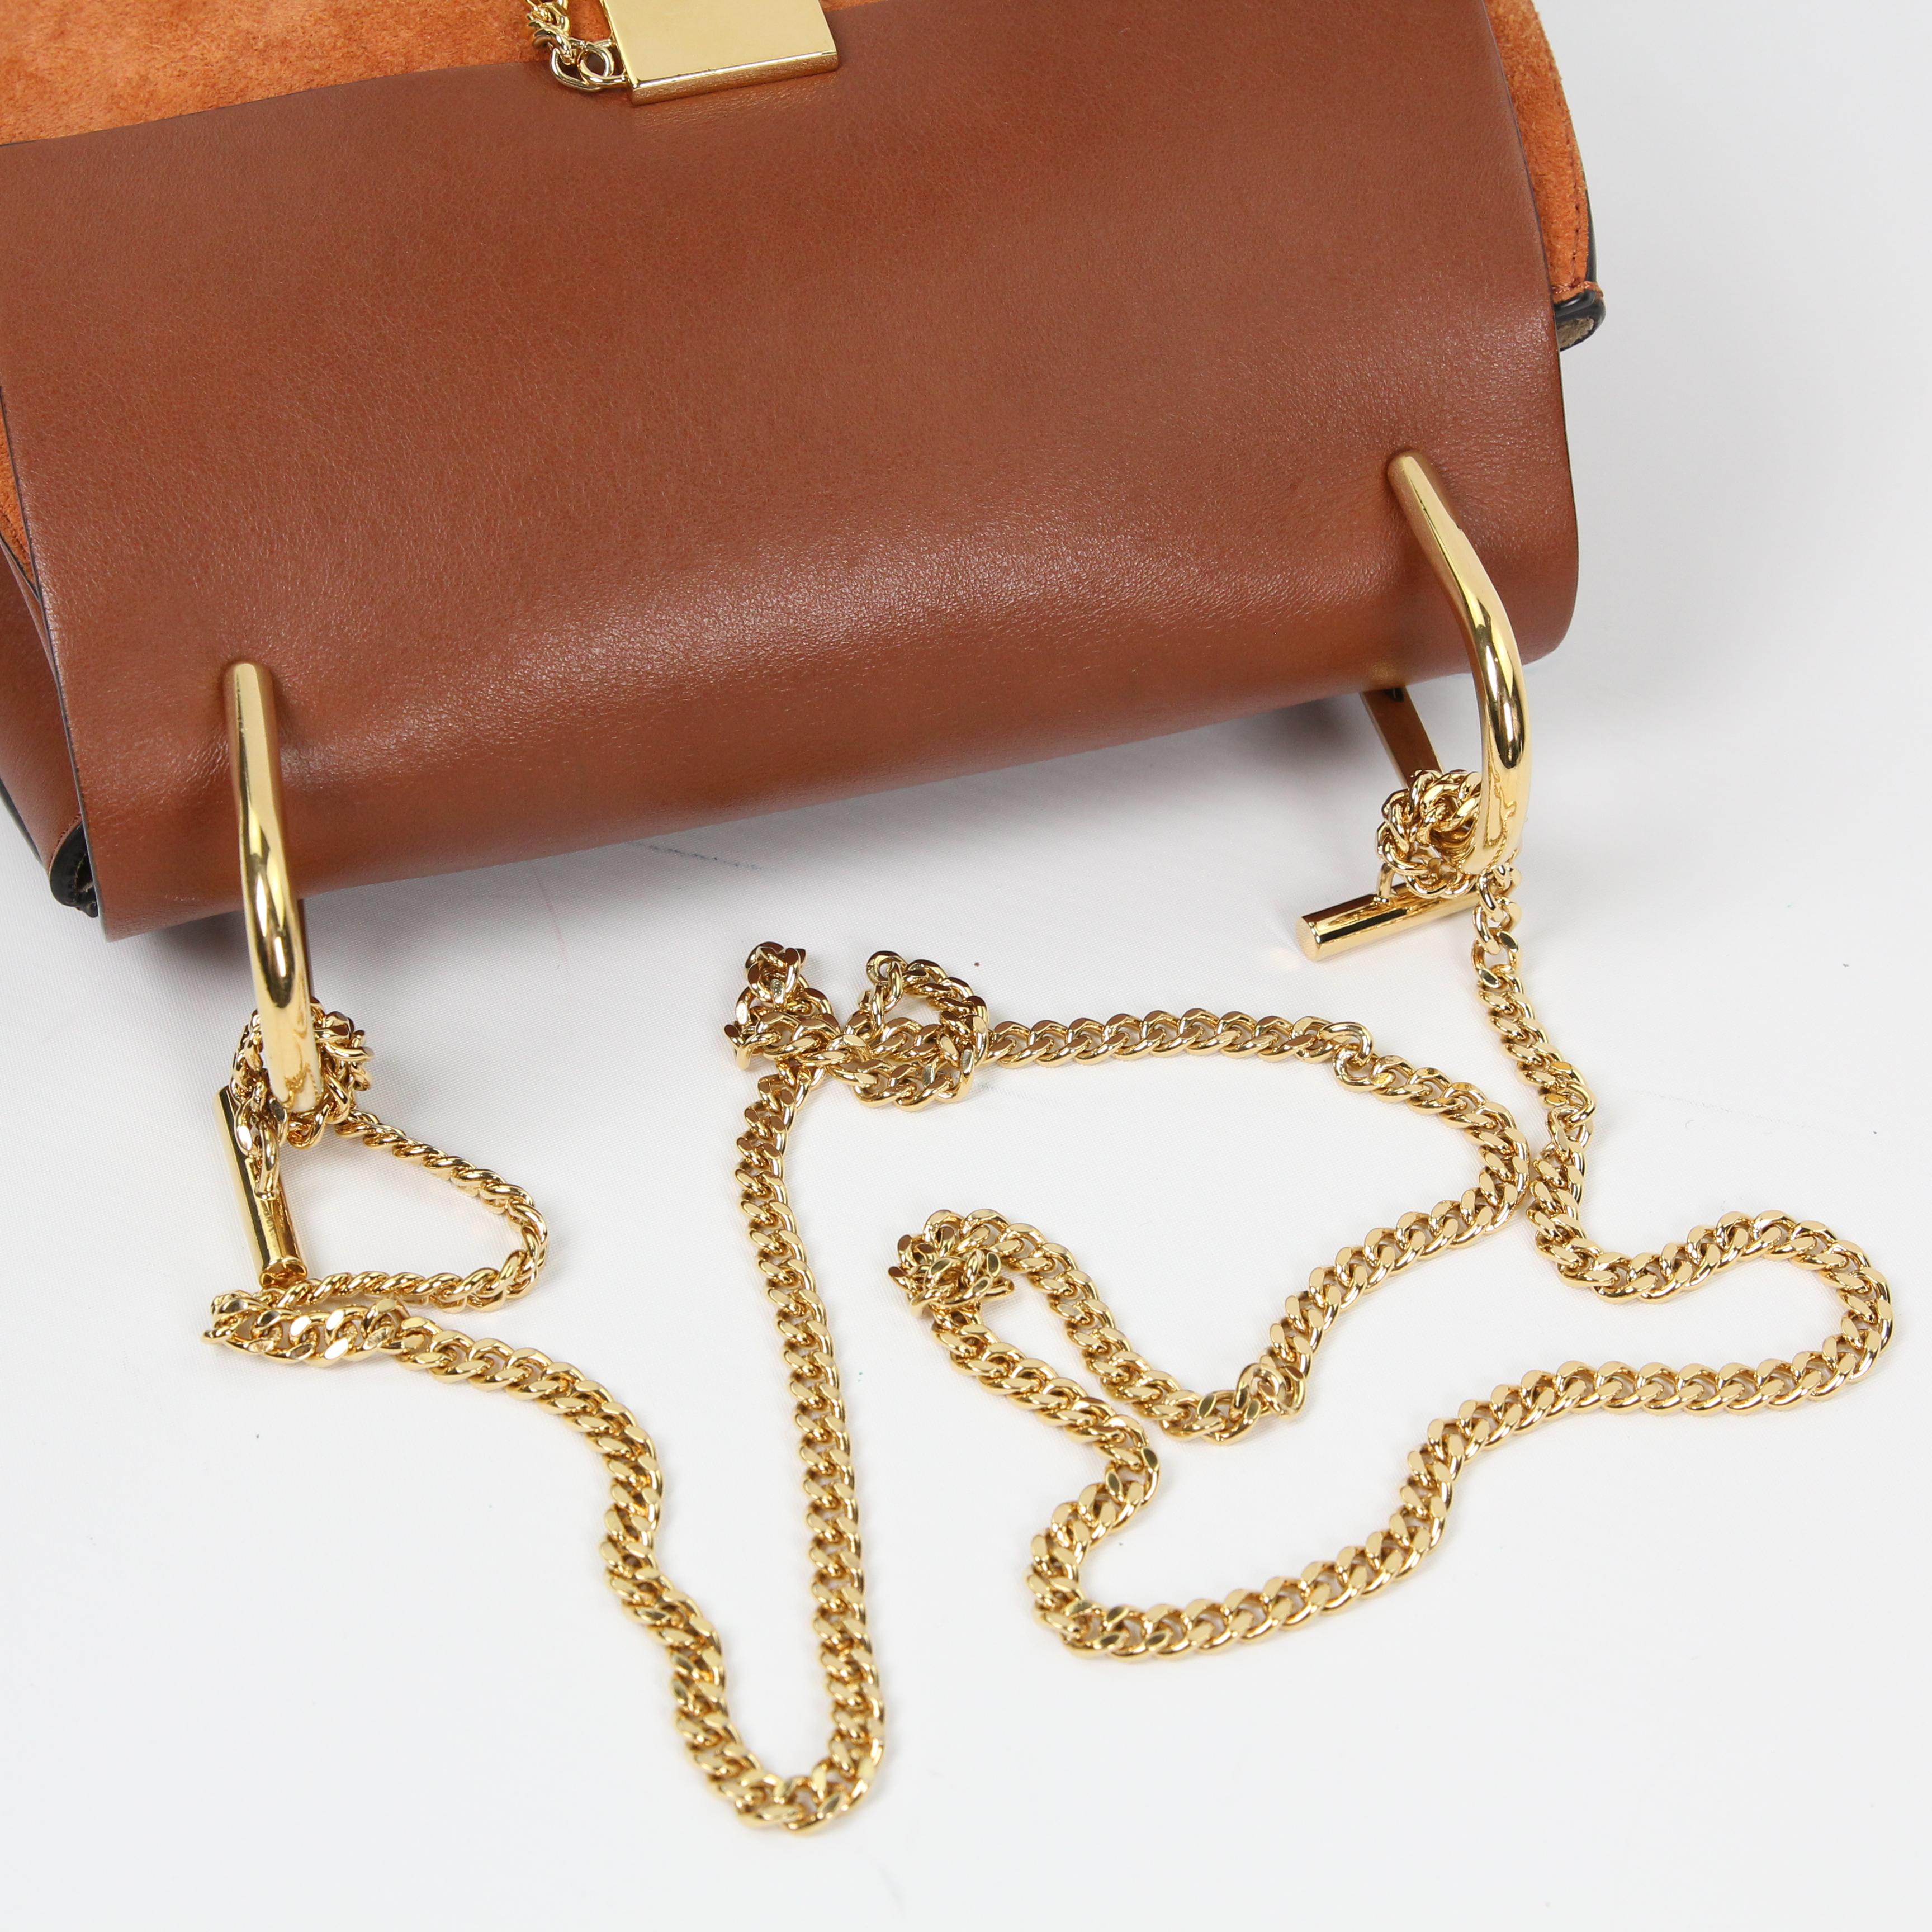 Women's Chloé Drew leather crossbody bag For Sale